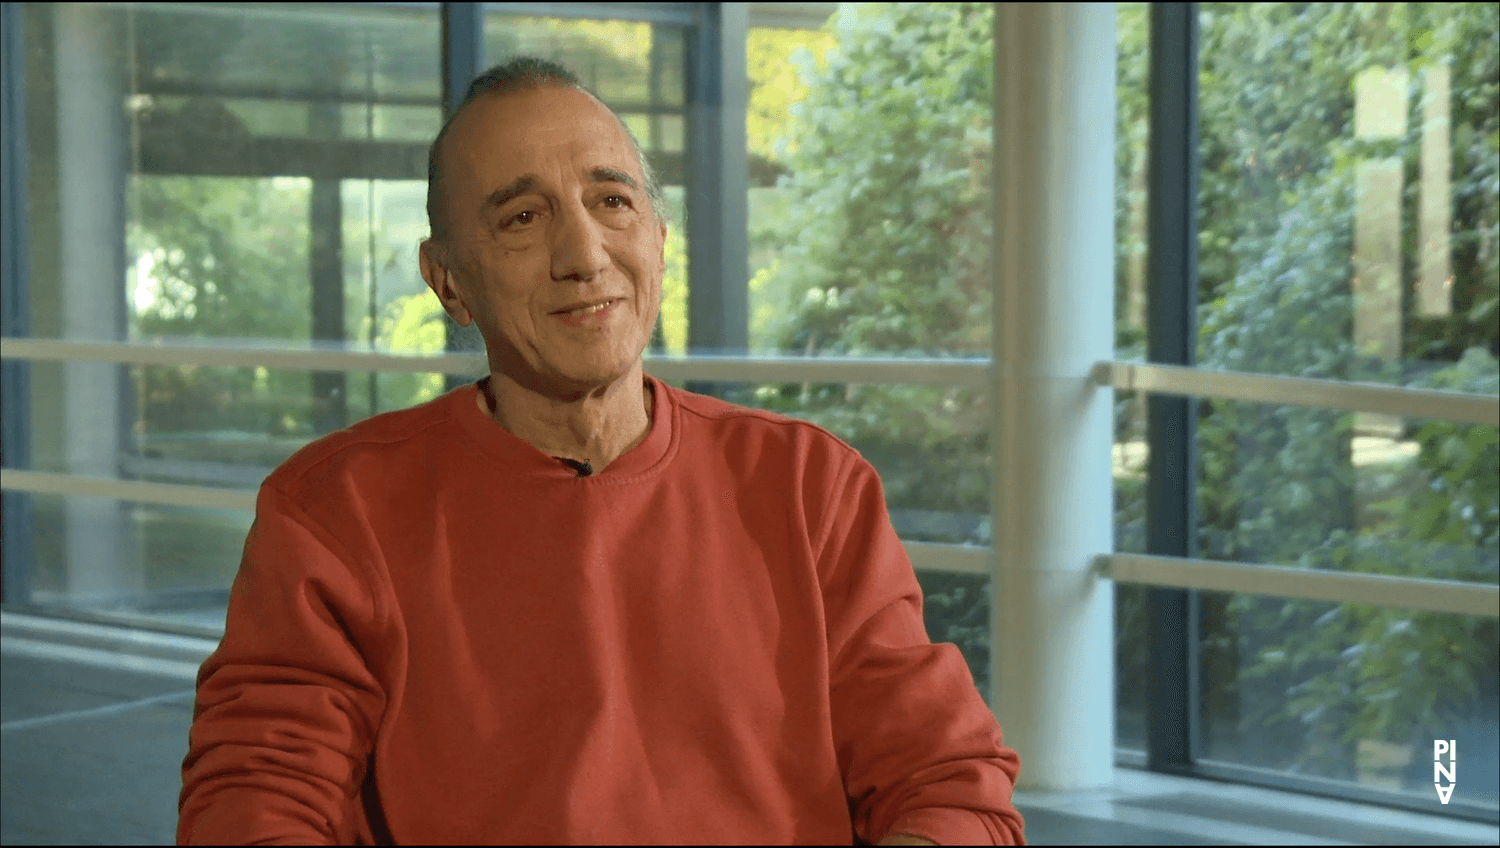 Interview mit Jean Laurent Sasportes, 5.10.2018